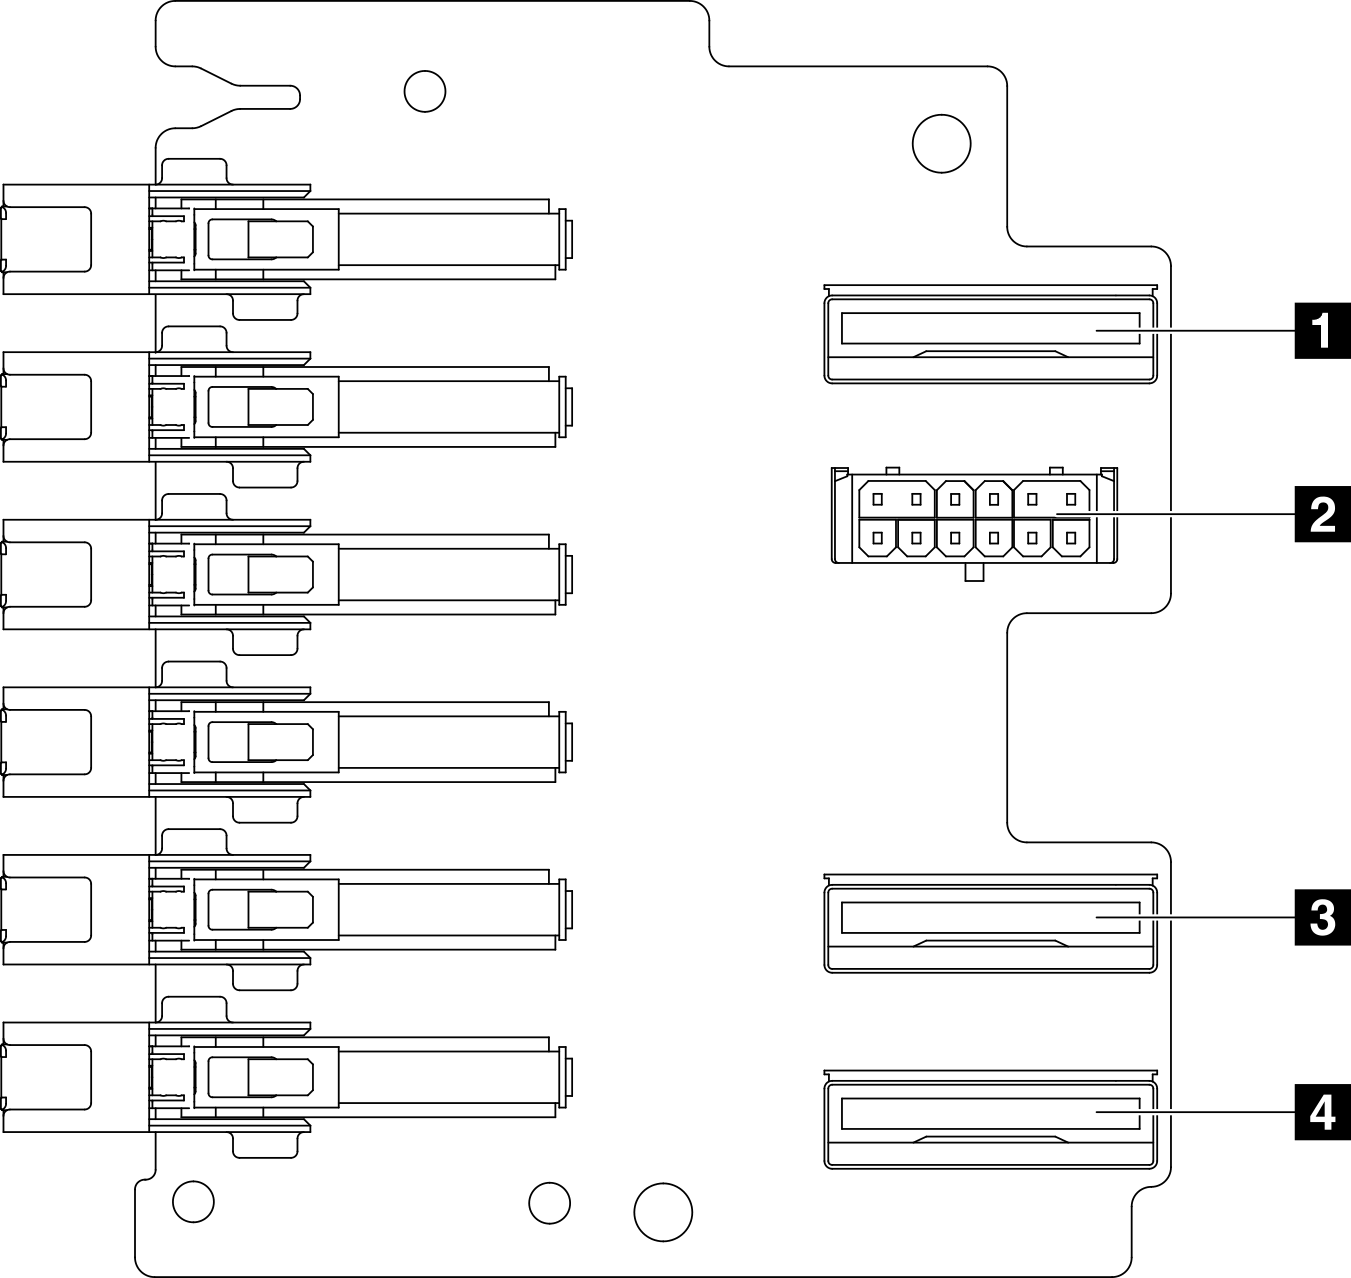 6x E1.S NVMe backplane connectors